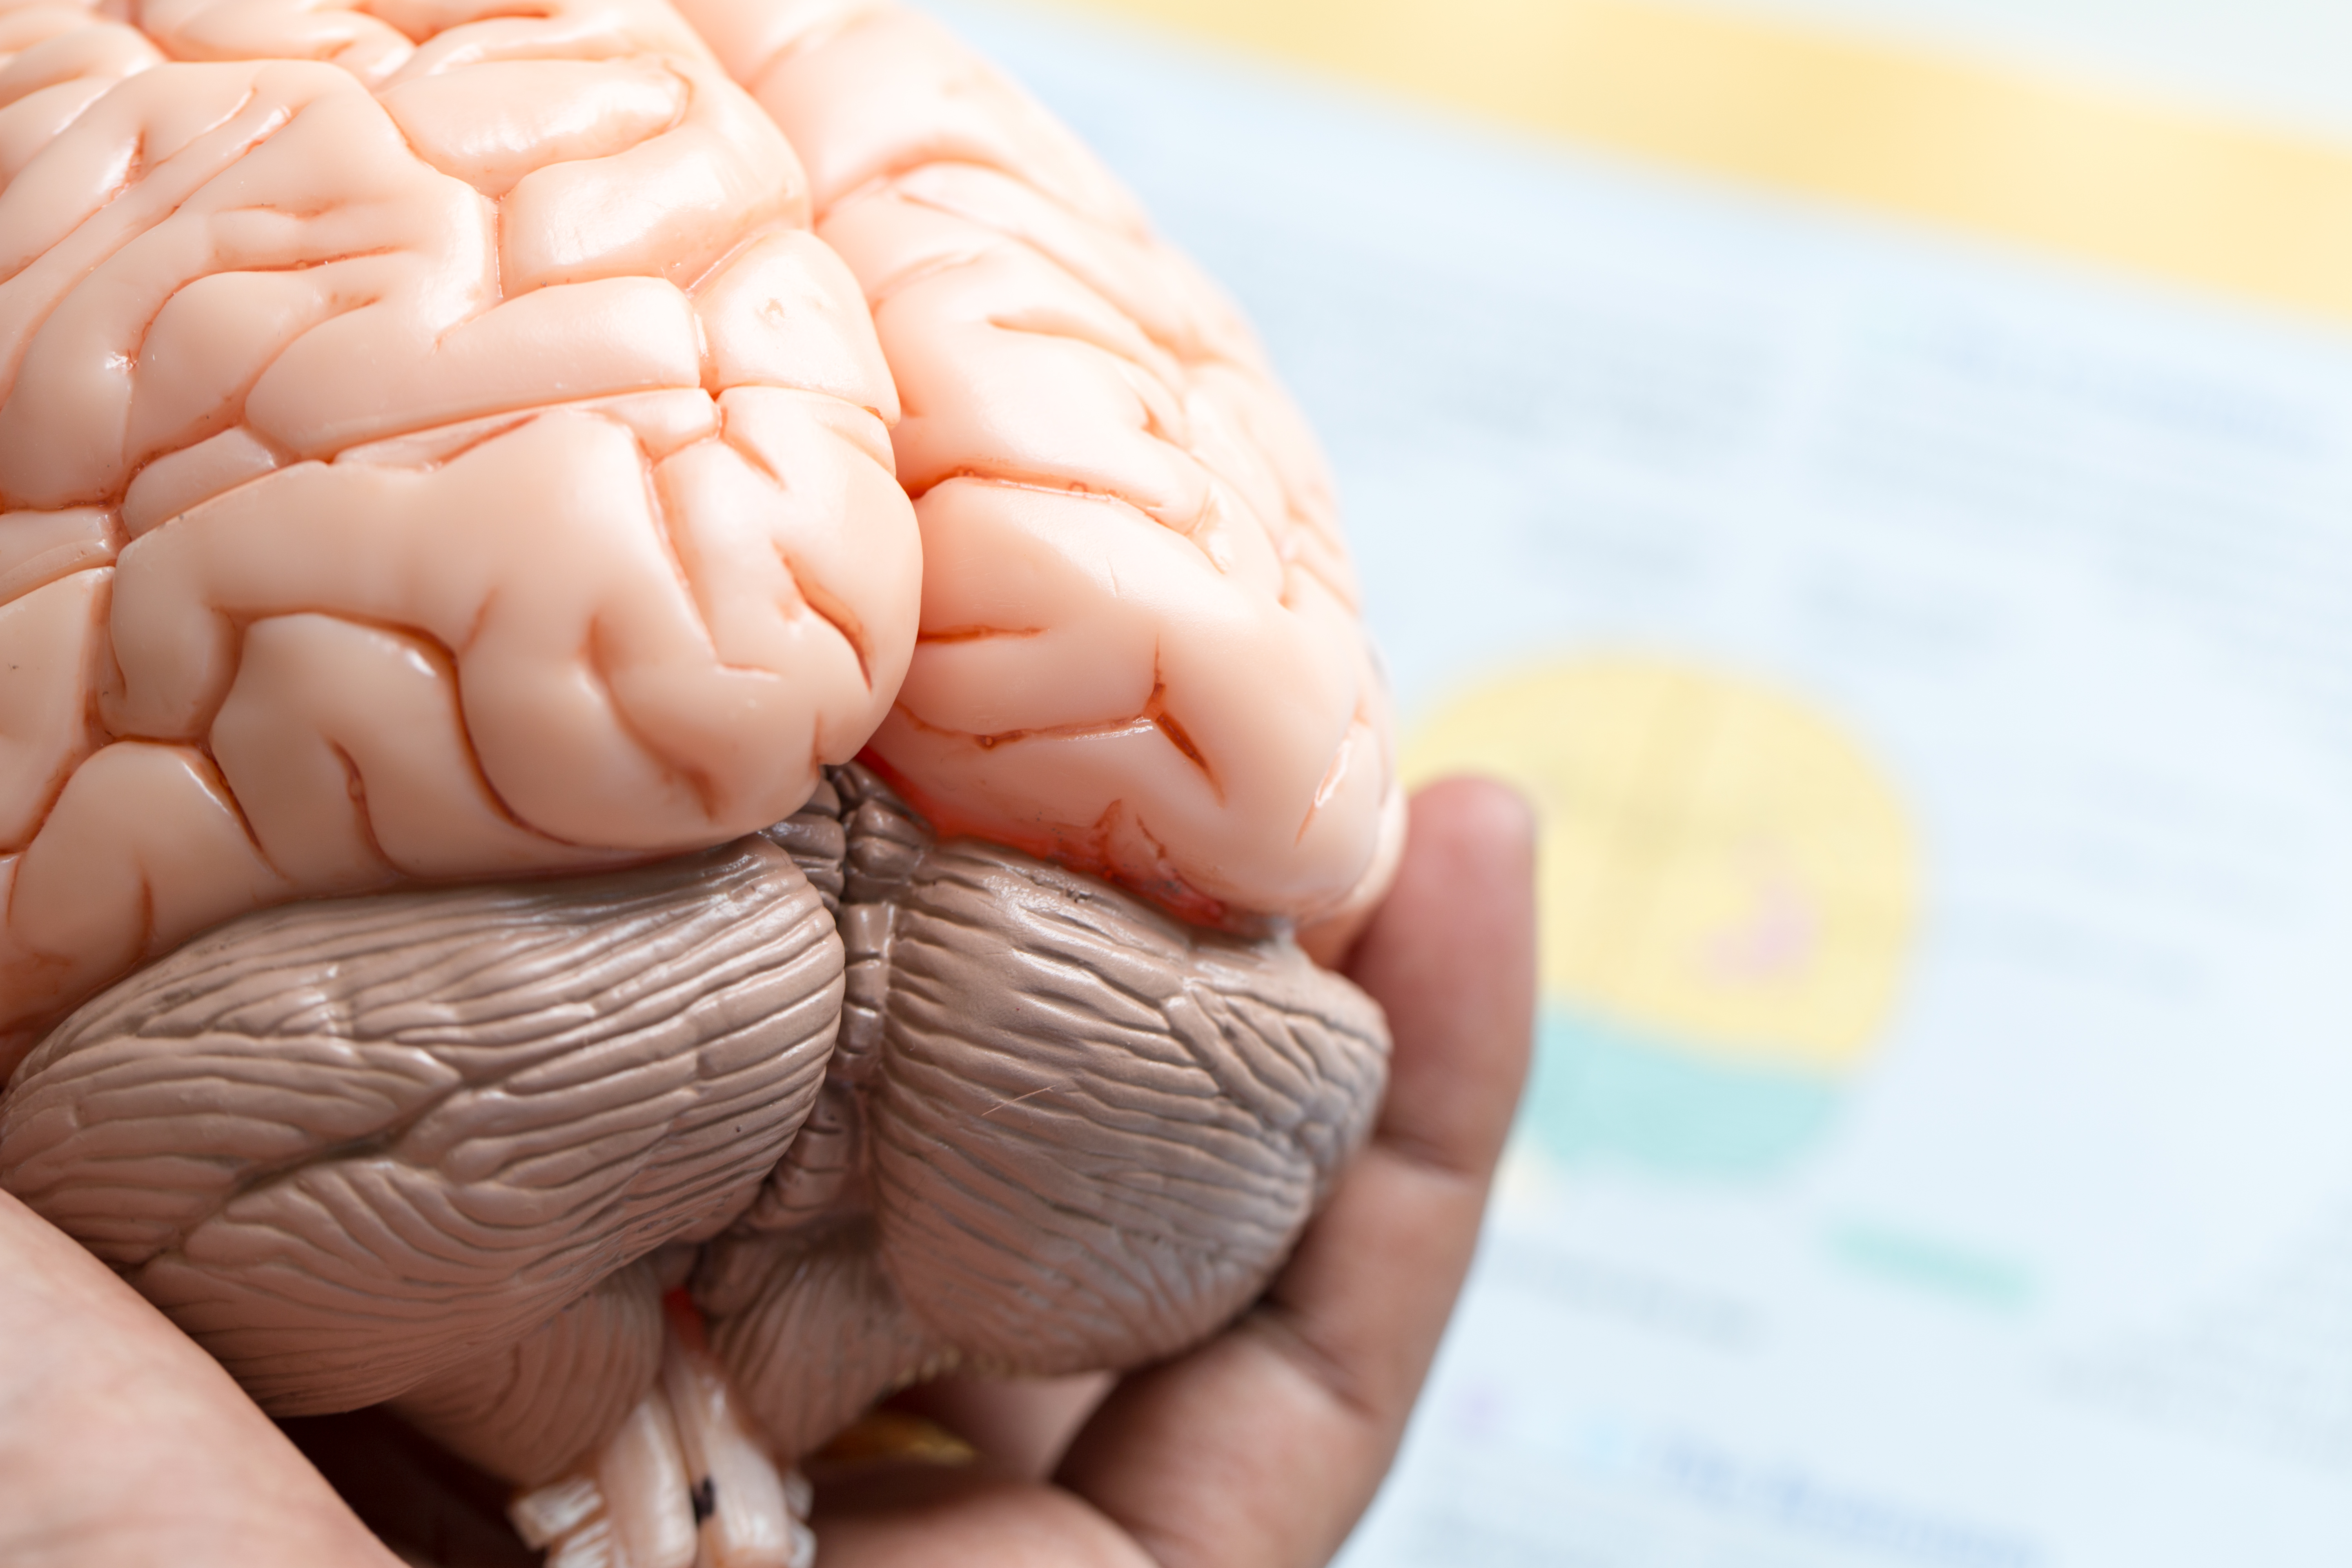 Human brain model for education in laboratory.